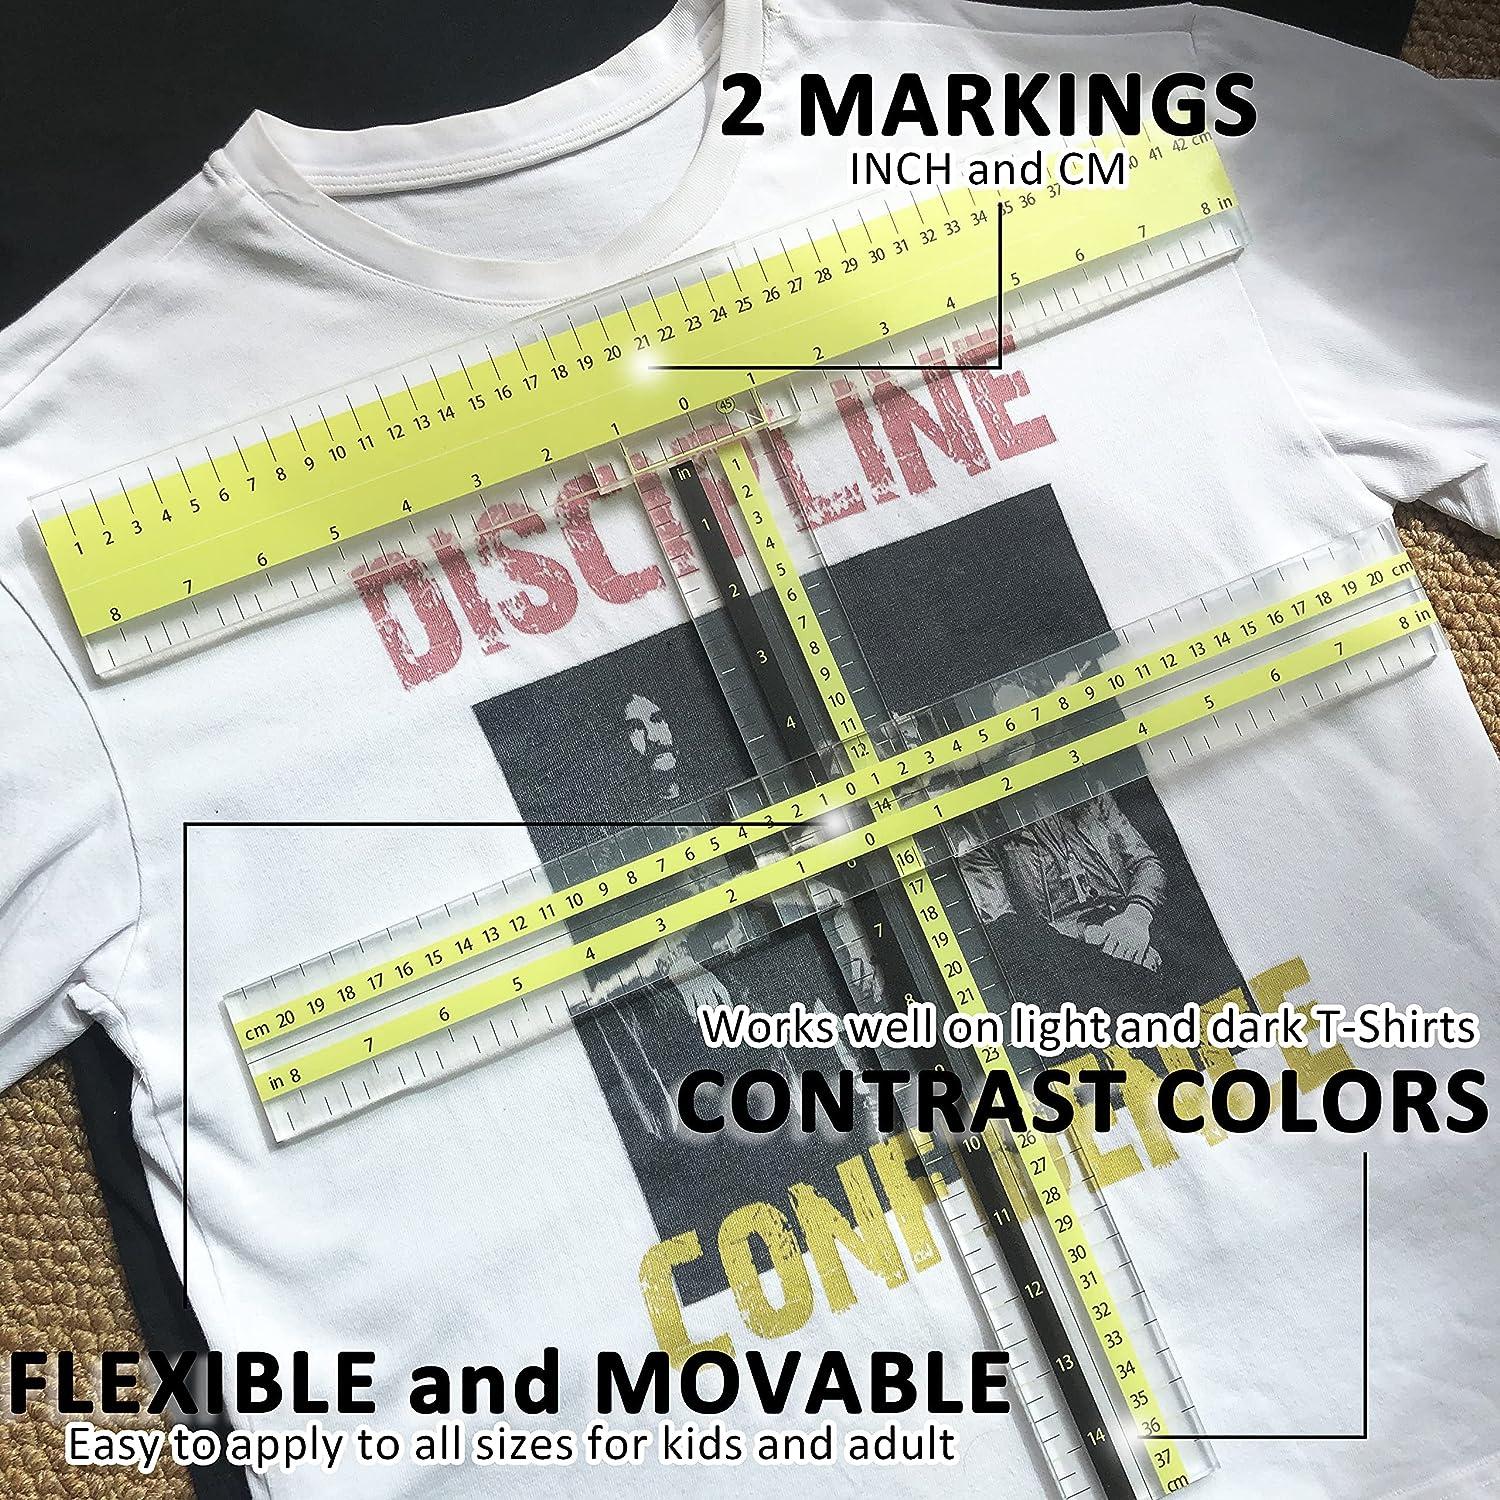 8 Pieces T-shirt Alignment Tool T-shirt Ruler Guide Tool T-shirt Craft Ruler  T-shirt Centering Tools For Guiding T-shirt Design